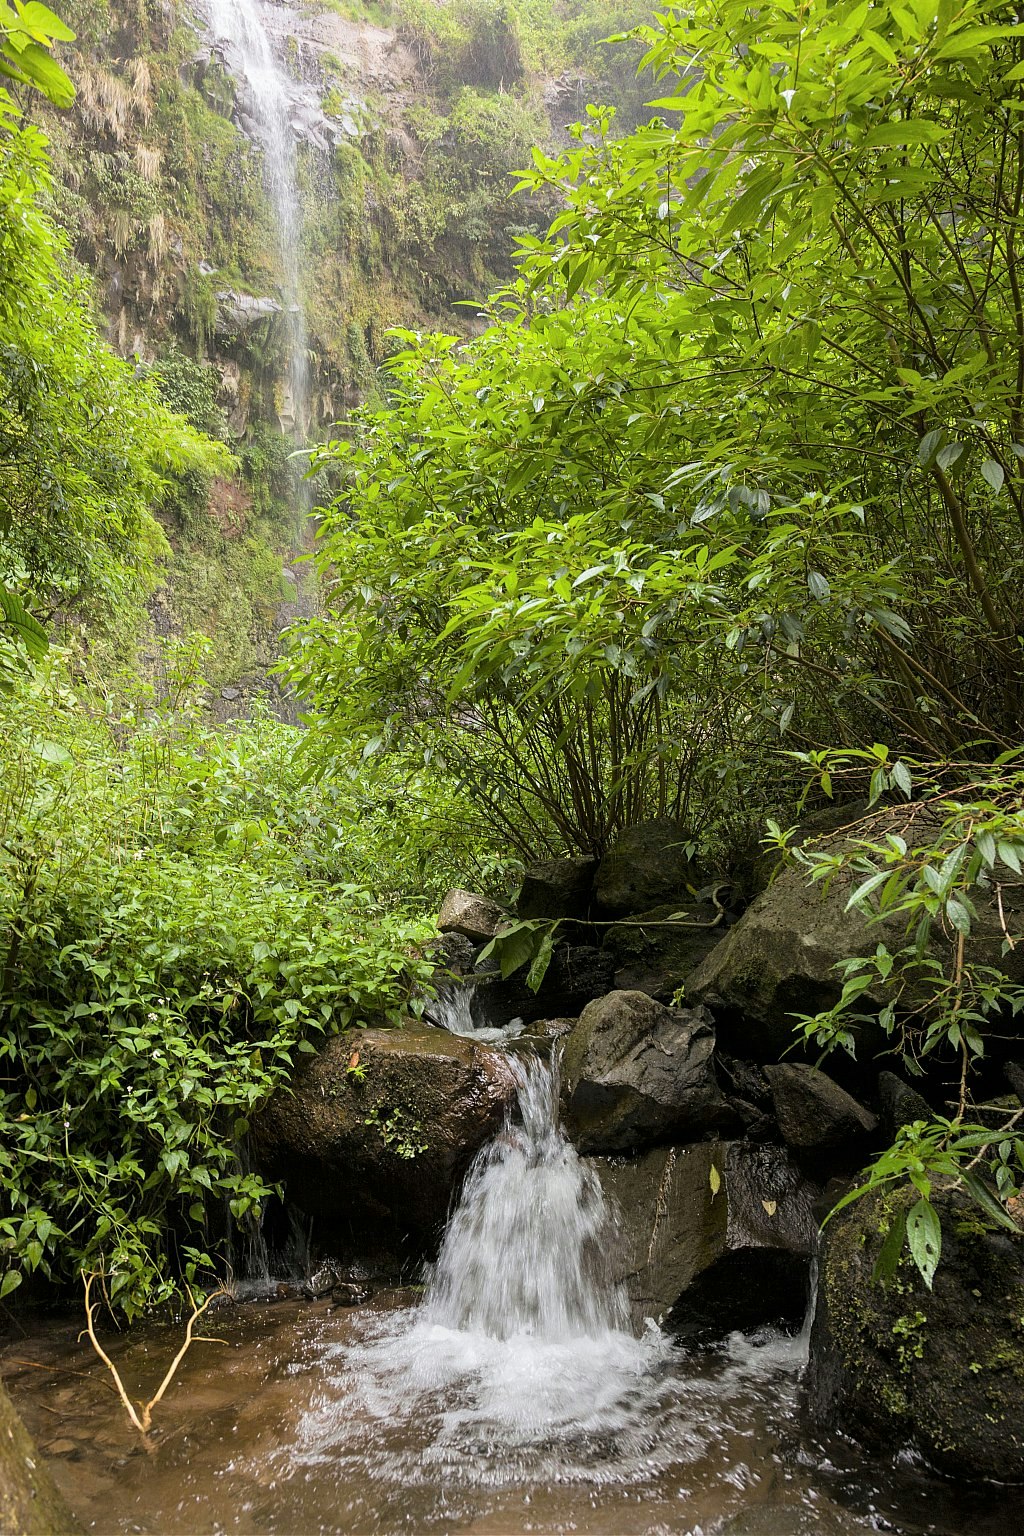 A waterfall tumbles down a cliff face amid verdant foliage along the Pipeline Trail near Boquete, Panama.